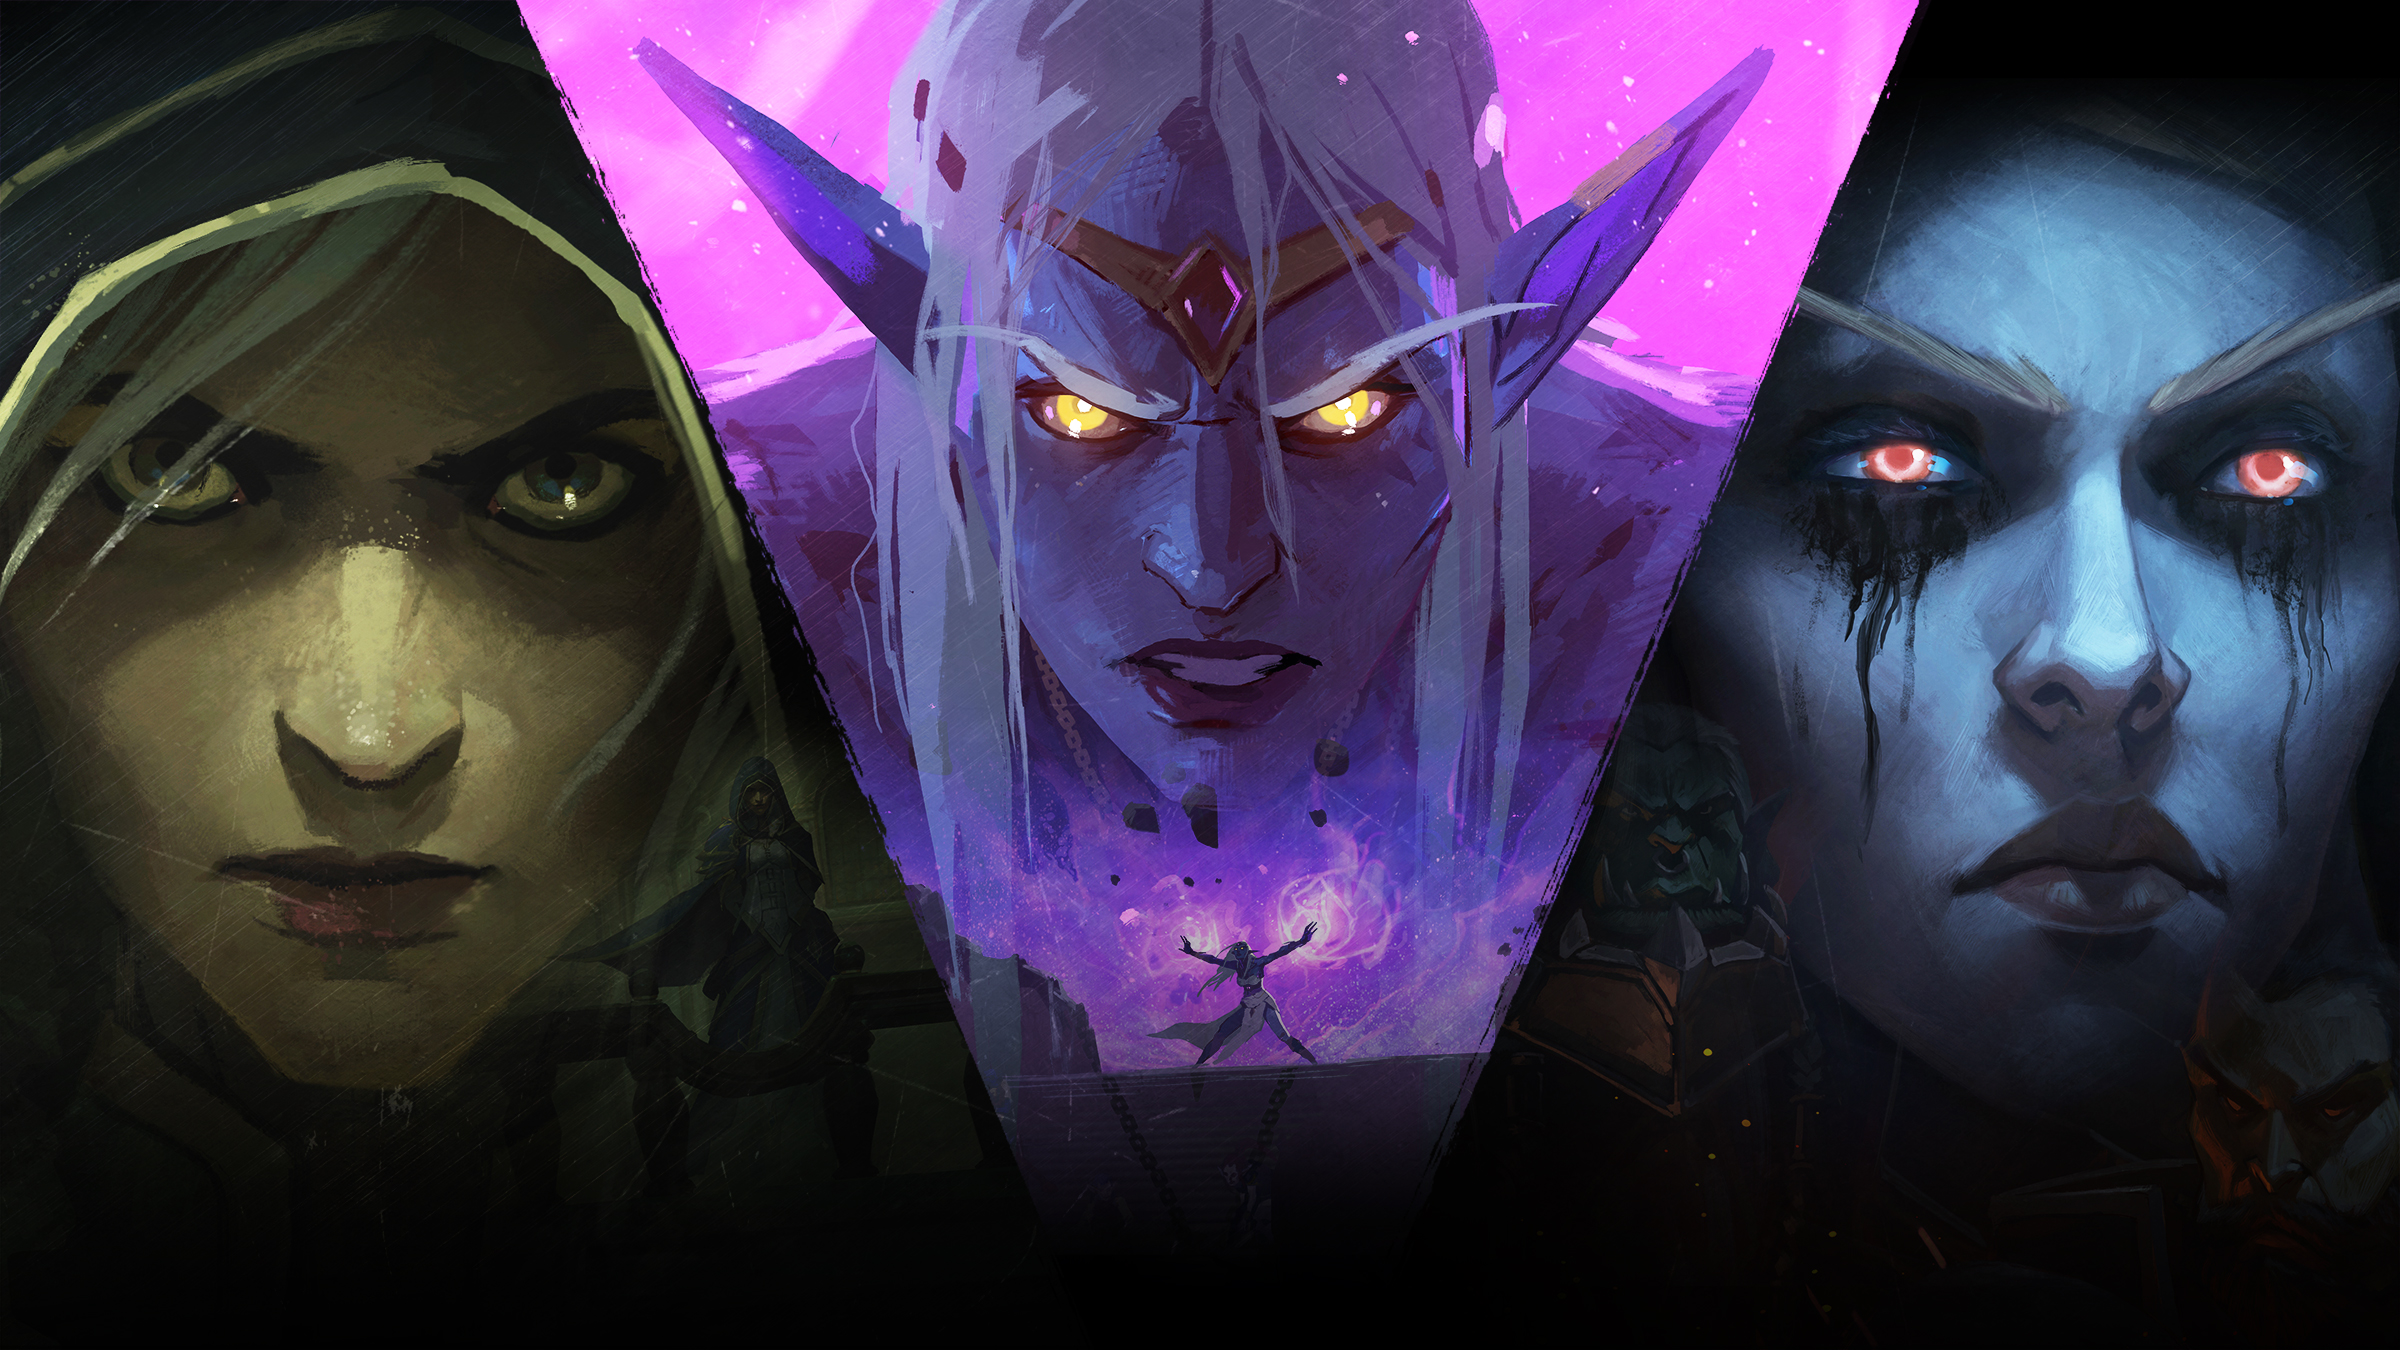 Warcraft Brasil – World of Warcraft: Battle for Azeroth